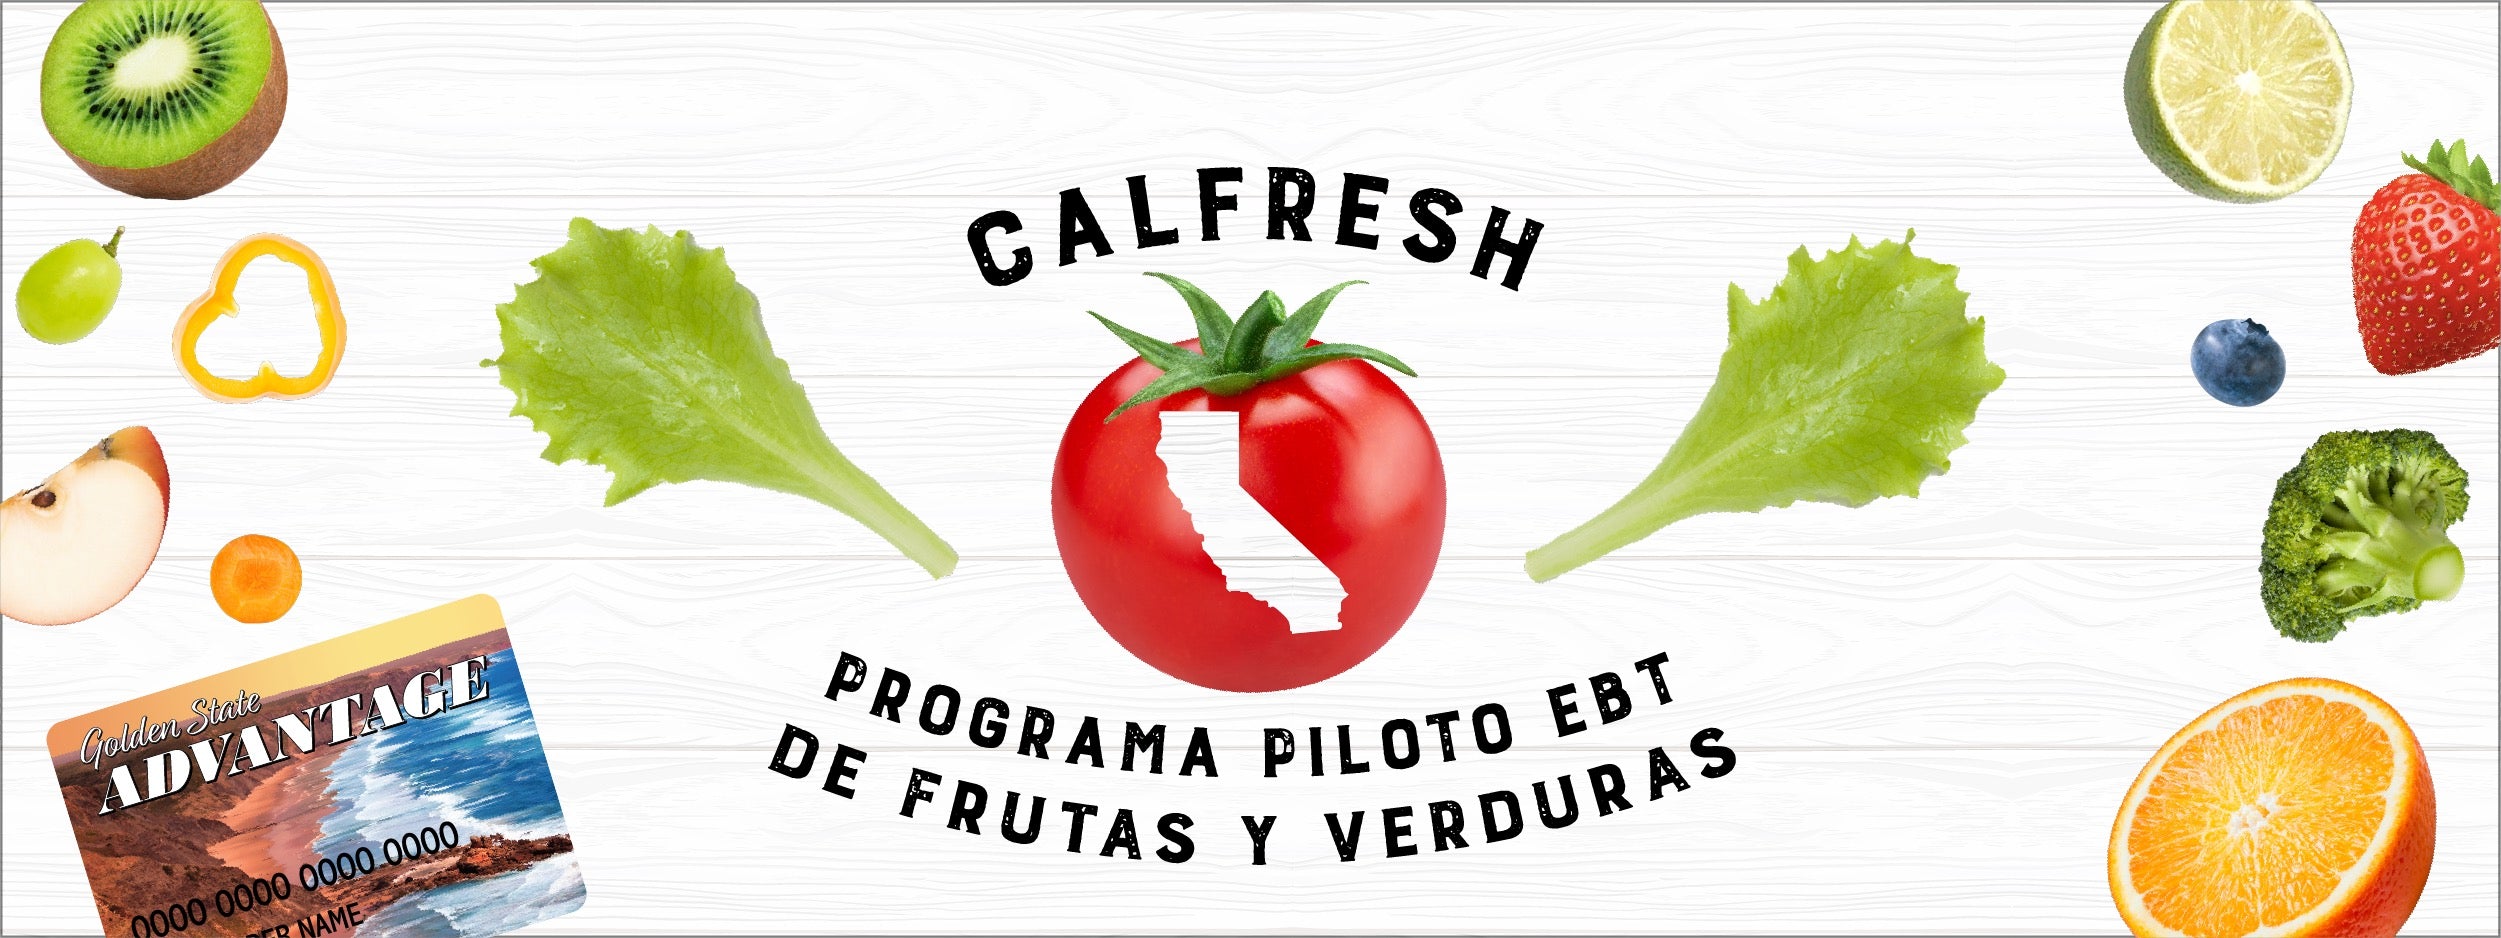 Programa Piloto EBT de Frutas y Verduras de CalFresh